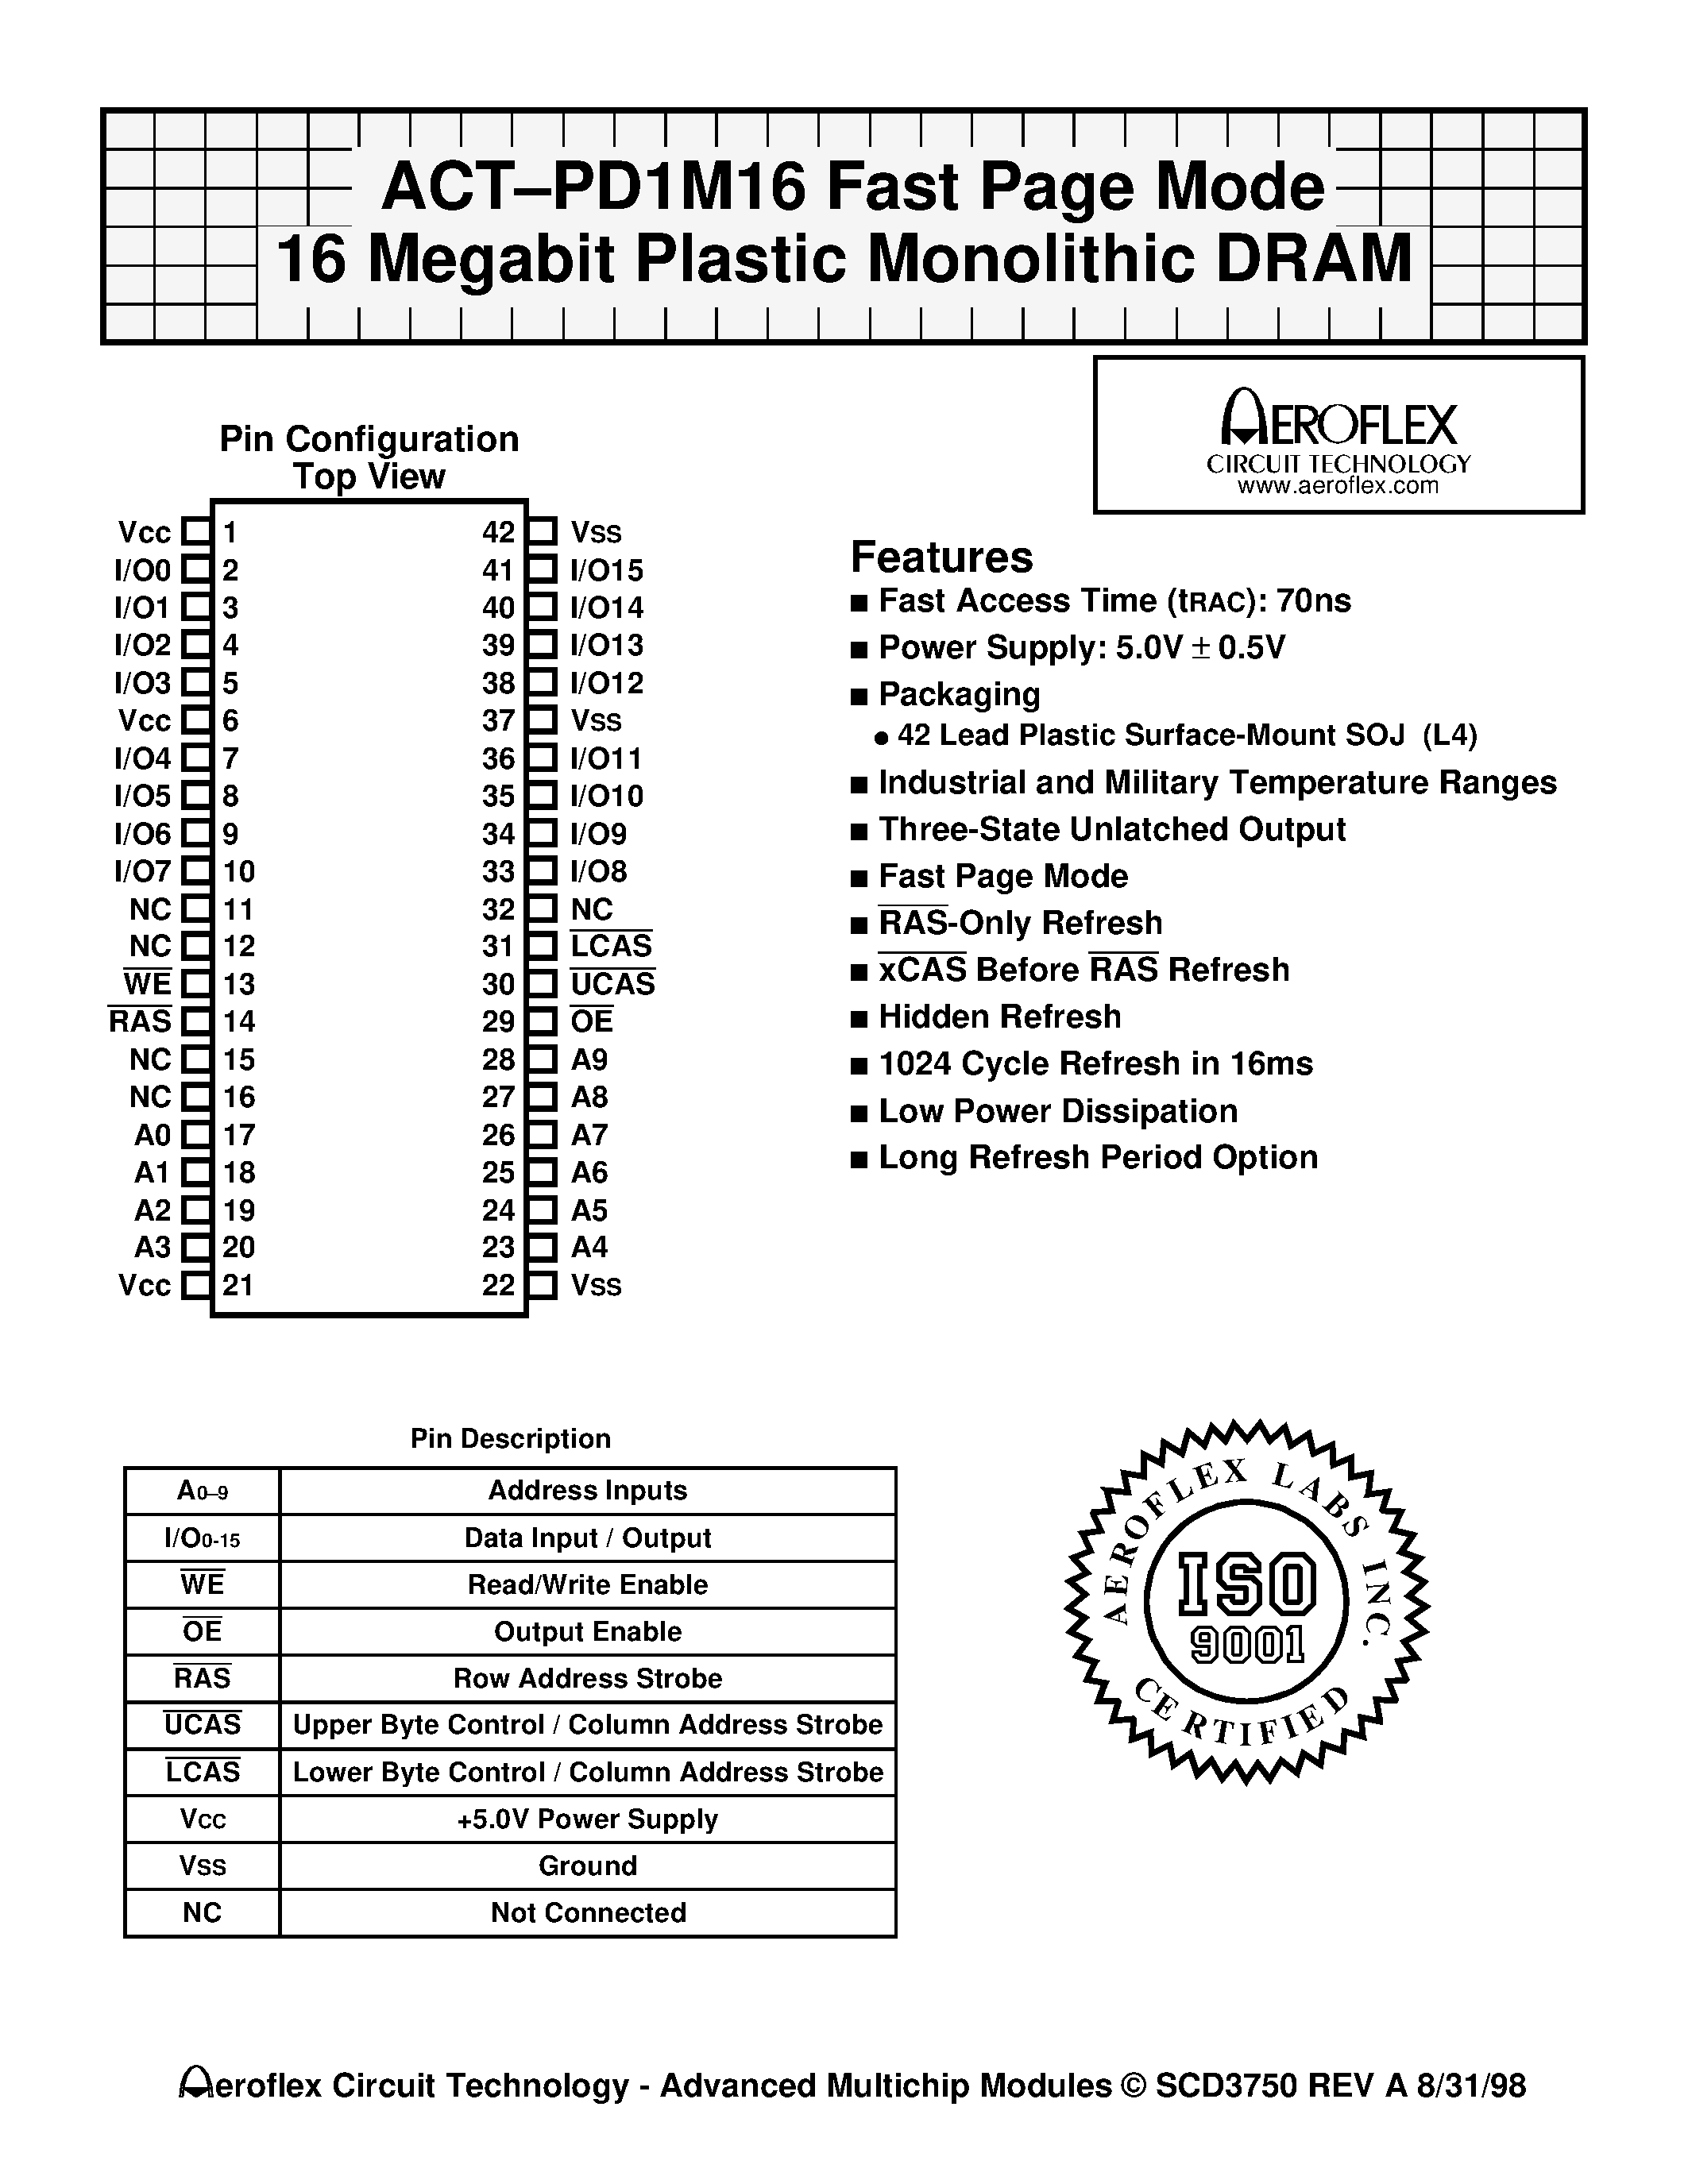 Datasheet ACTPD1M16 - ACT-PD1M16 Fast Page Mode 16 Megabit Plastic Monolithic DRAM page 1